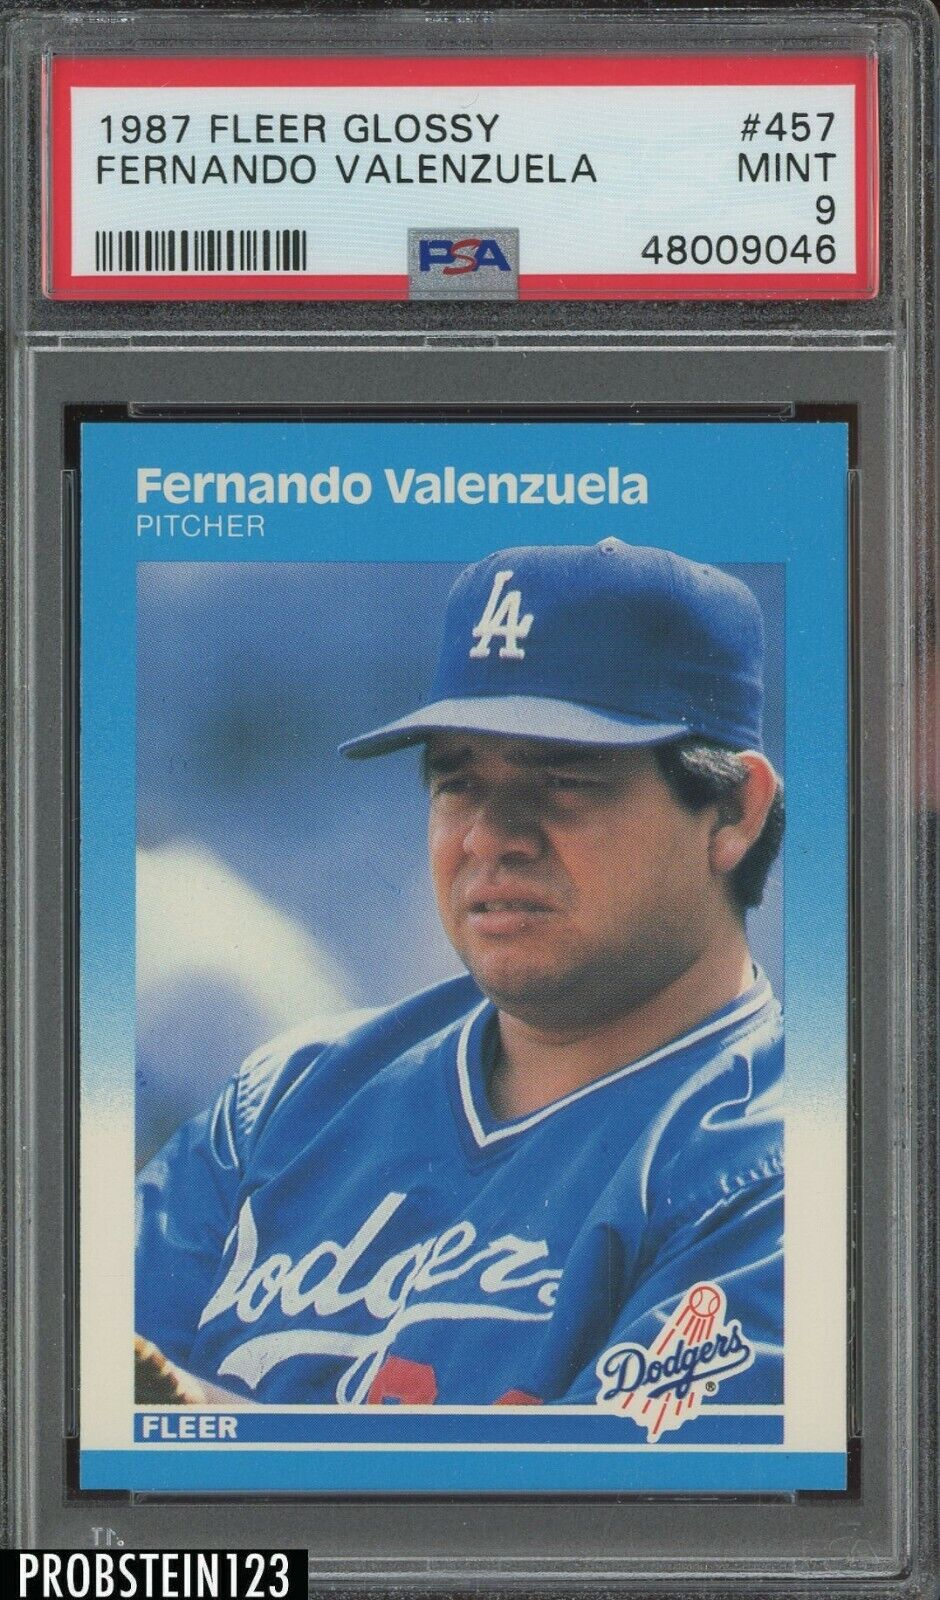 1987 Fleer Glossy #457 Fernando Valenzuela Los Angeles Dodgers PSA 9 MINT